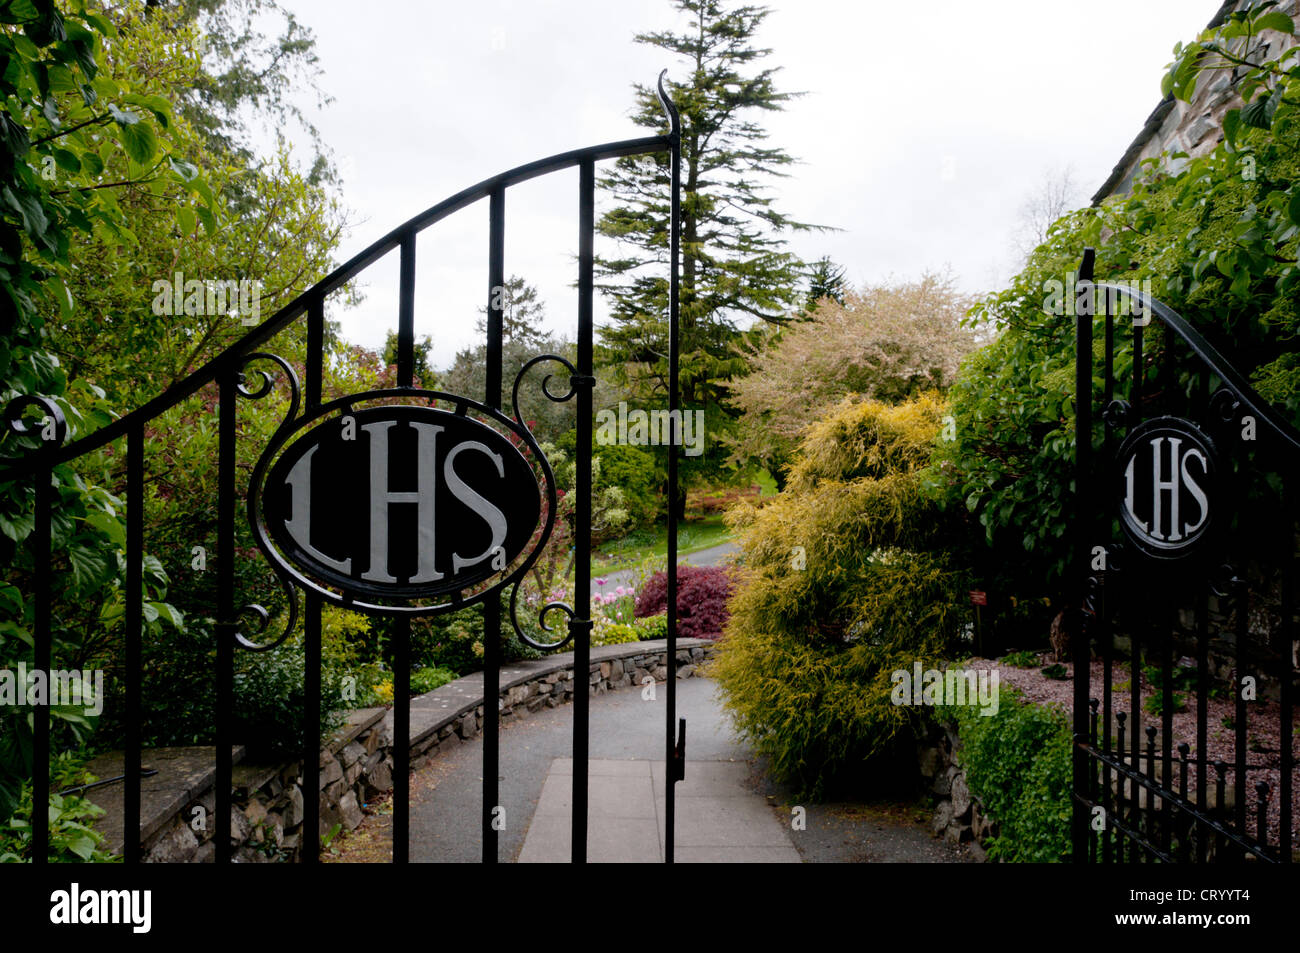 Puertas de entrada a Lakeland Horticultural Society Gardens en Holehird. Foto de stock